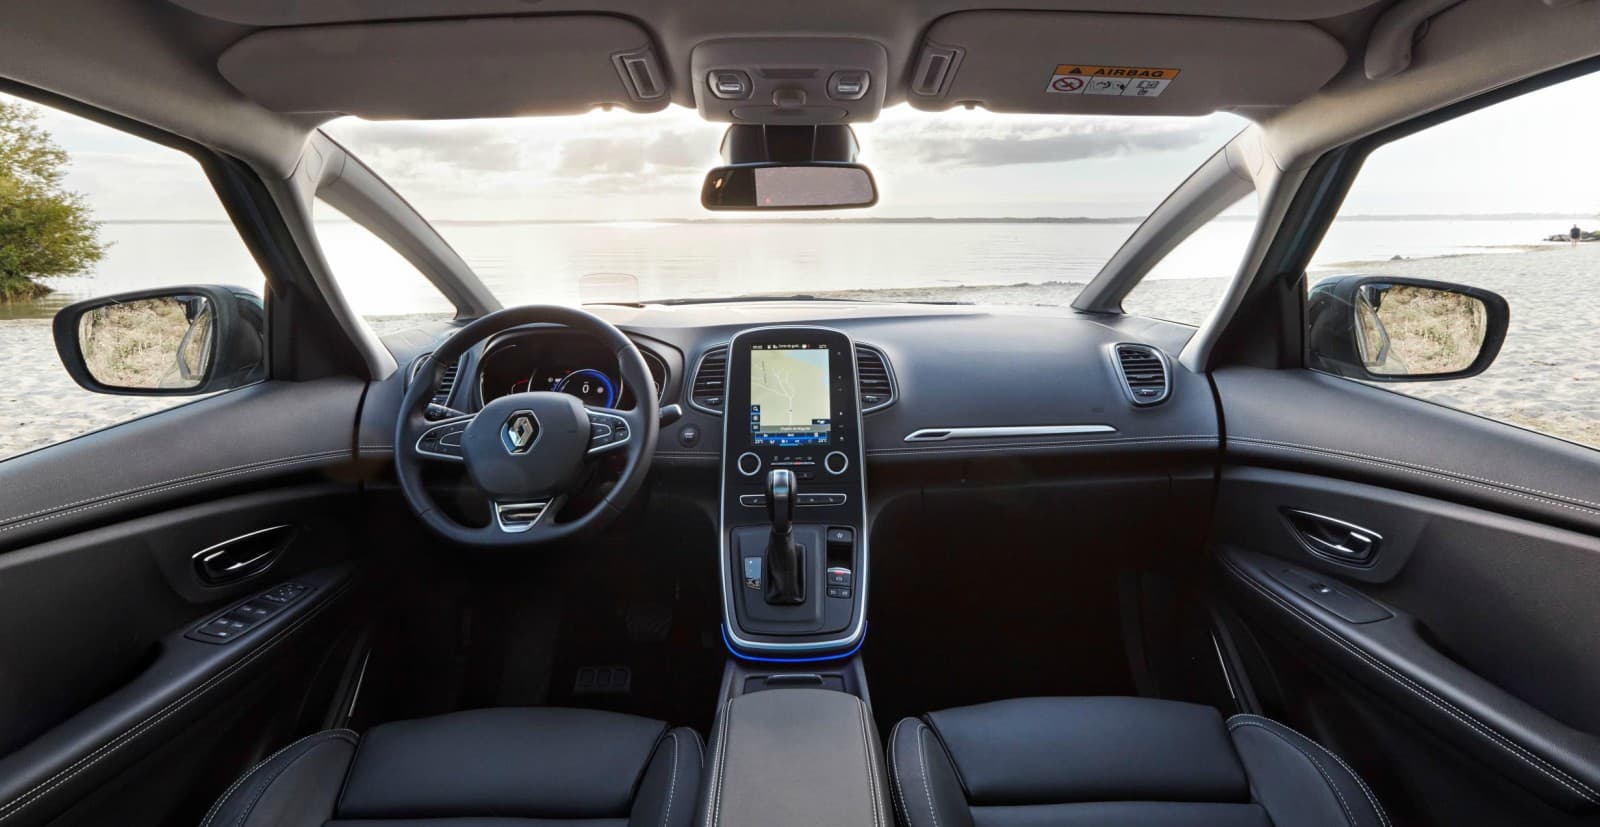 Renault Grand Scenic interior - Cockpit